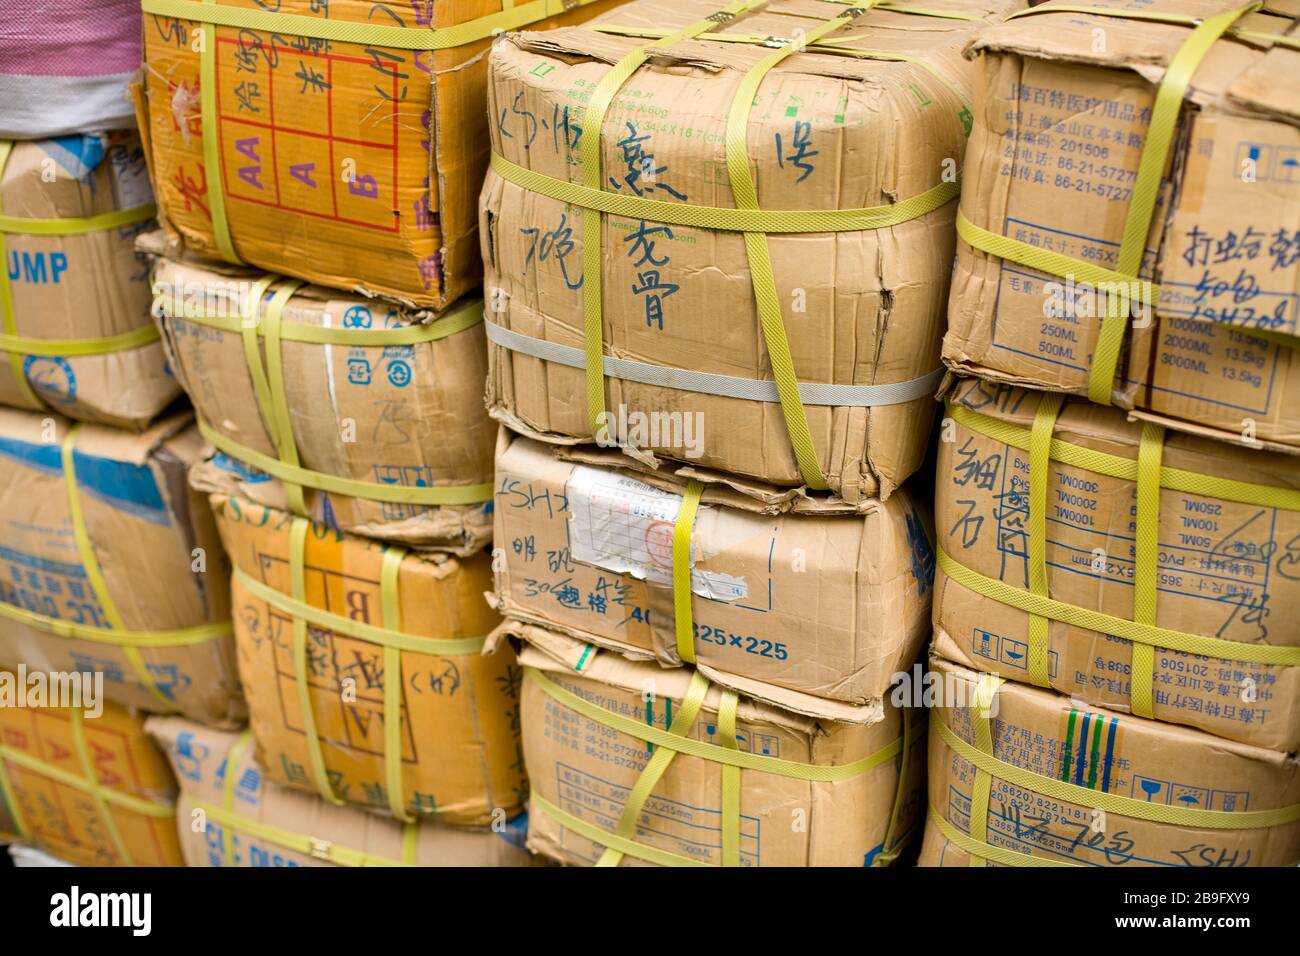 Hong Kong, Sheung WAN, China - le scatole di merci hanno puntato nella strada nei mercati di Hong Kong occidentale. Foto Stock